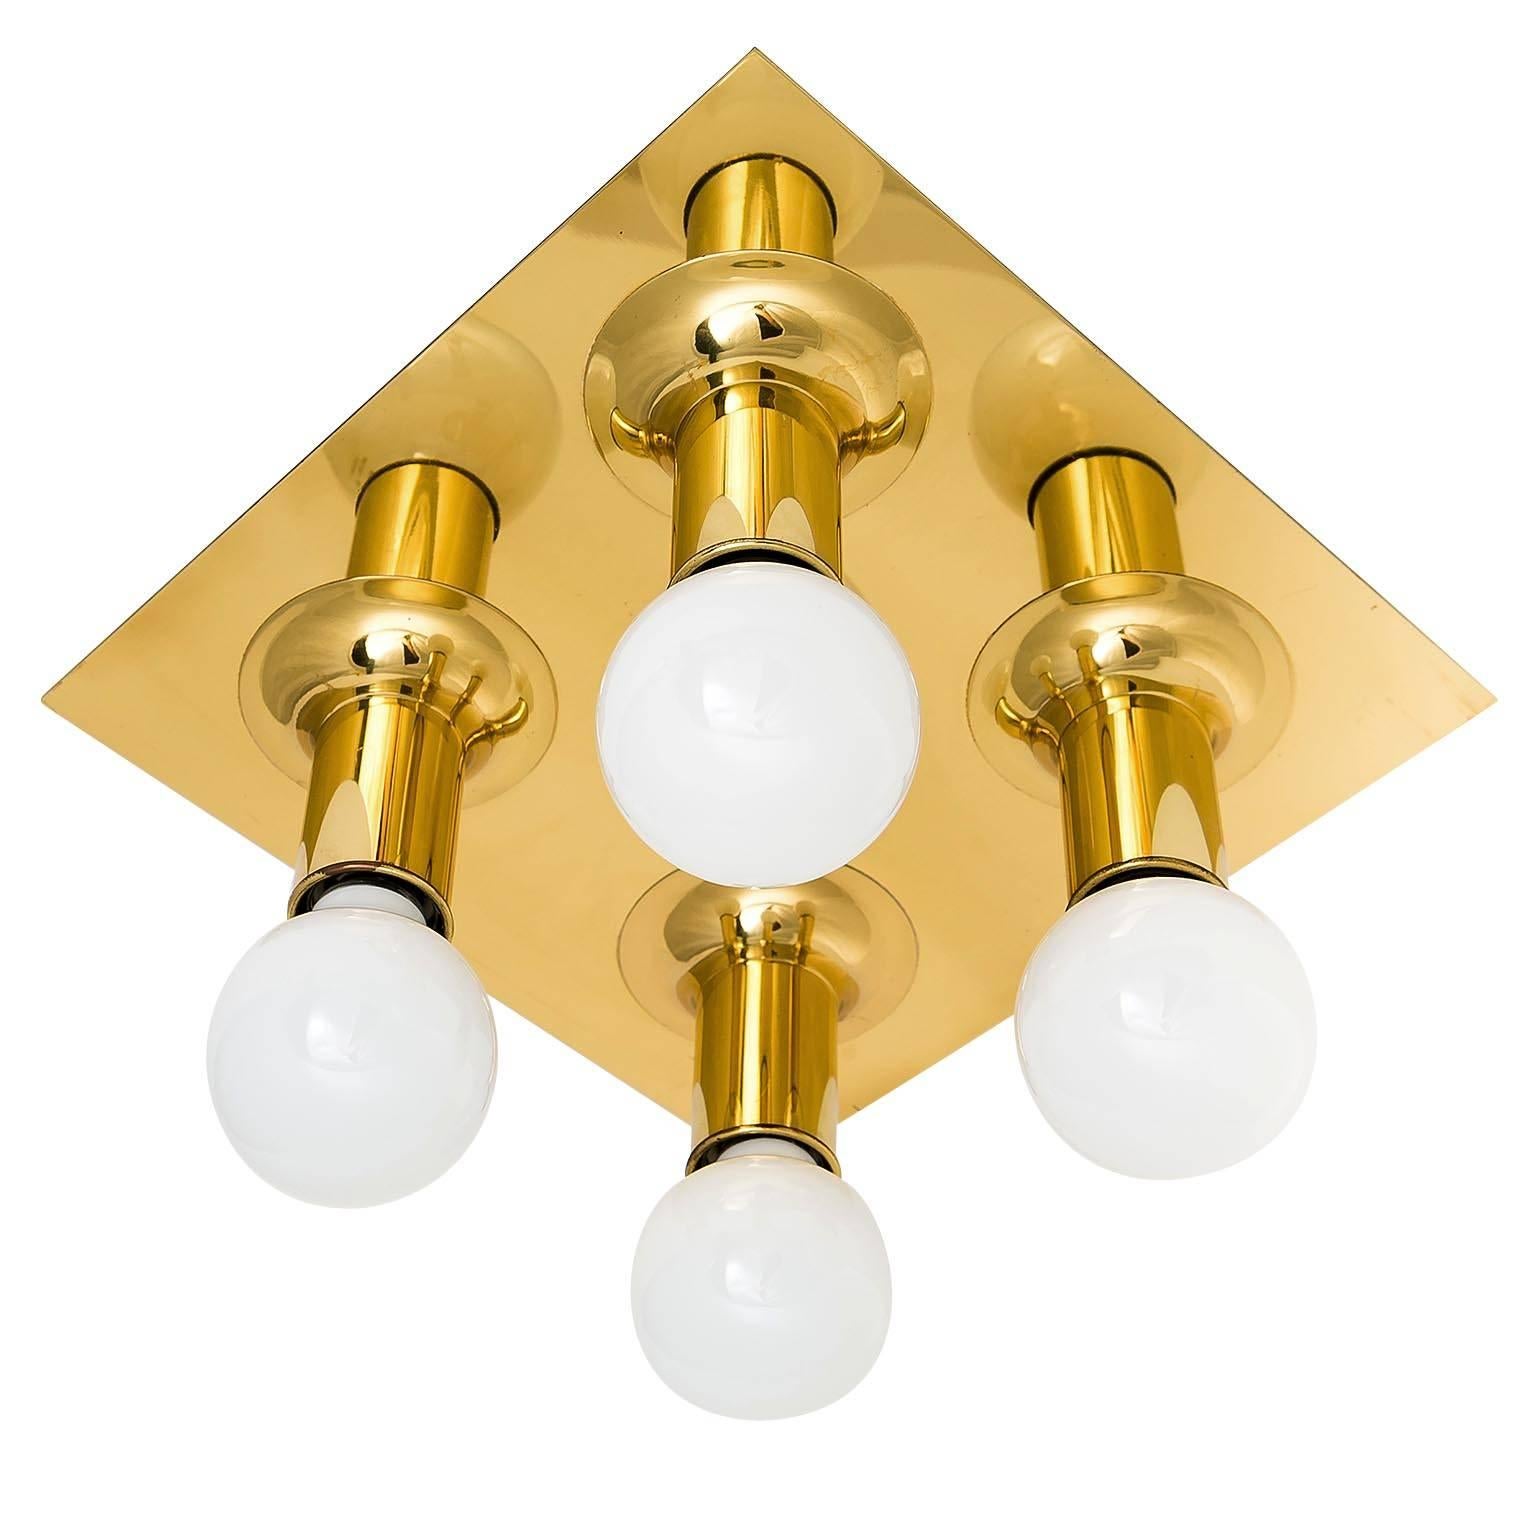 Five Flush Mount or Wall Light Fixtures Sputnik Brass by Cosack, Germany, 1970